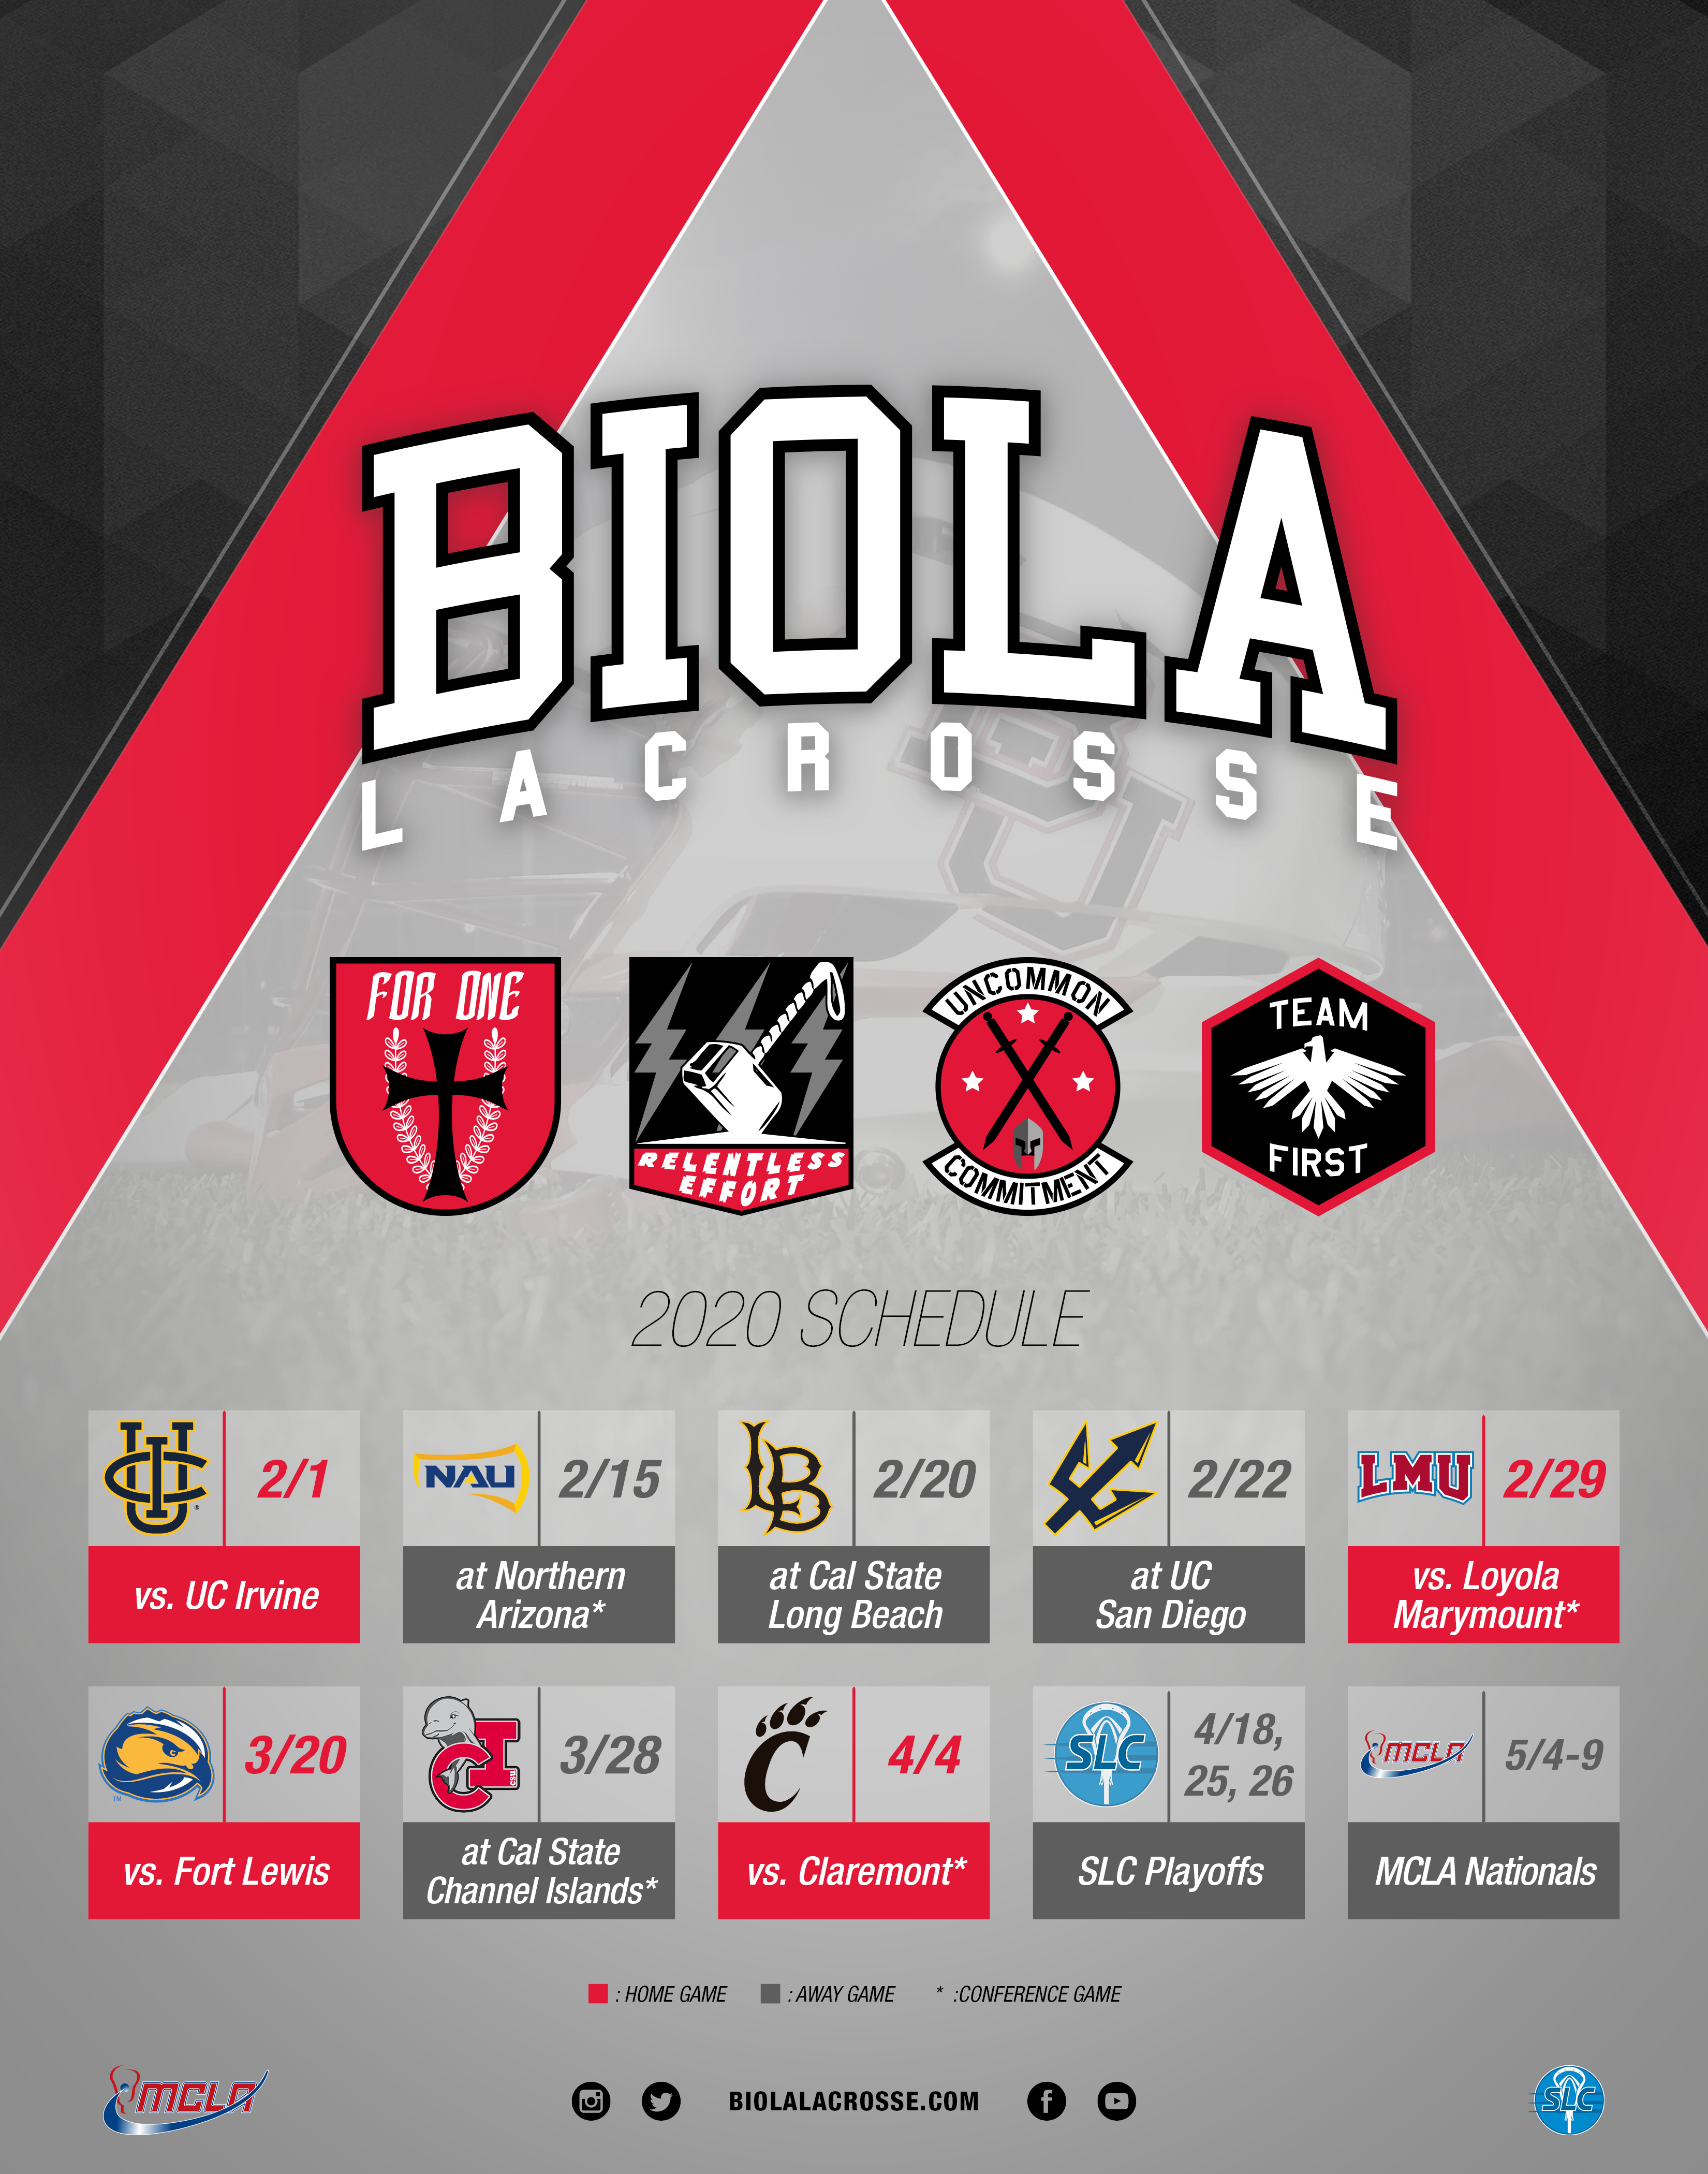 2020 Biola lacrosse schedule poster